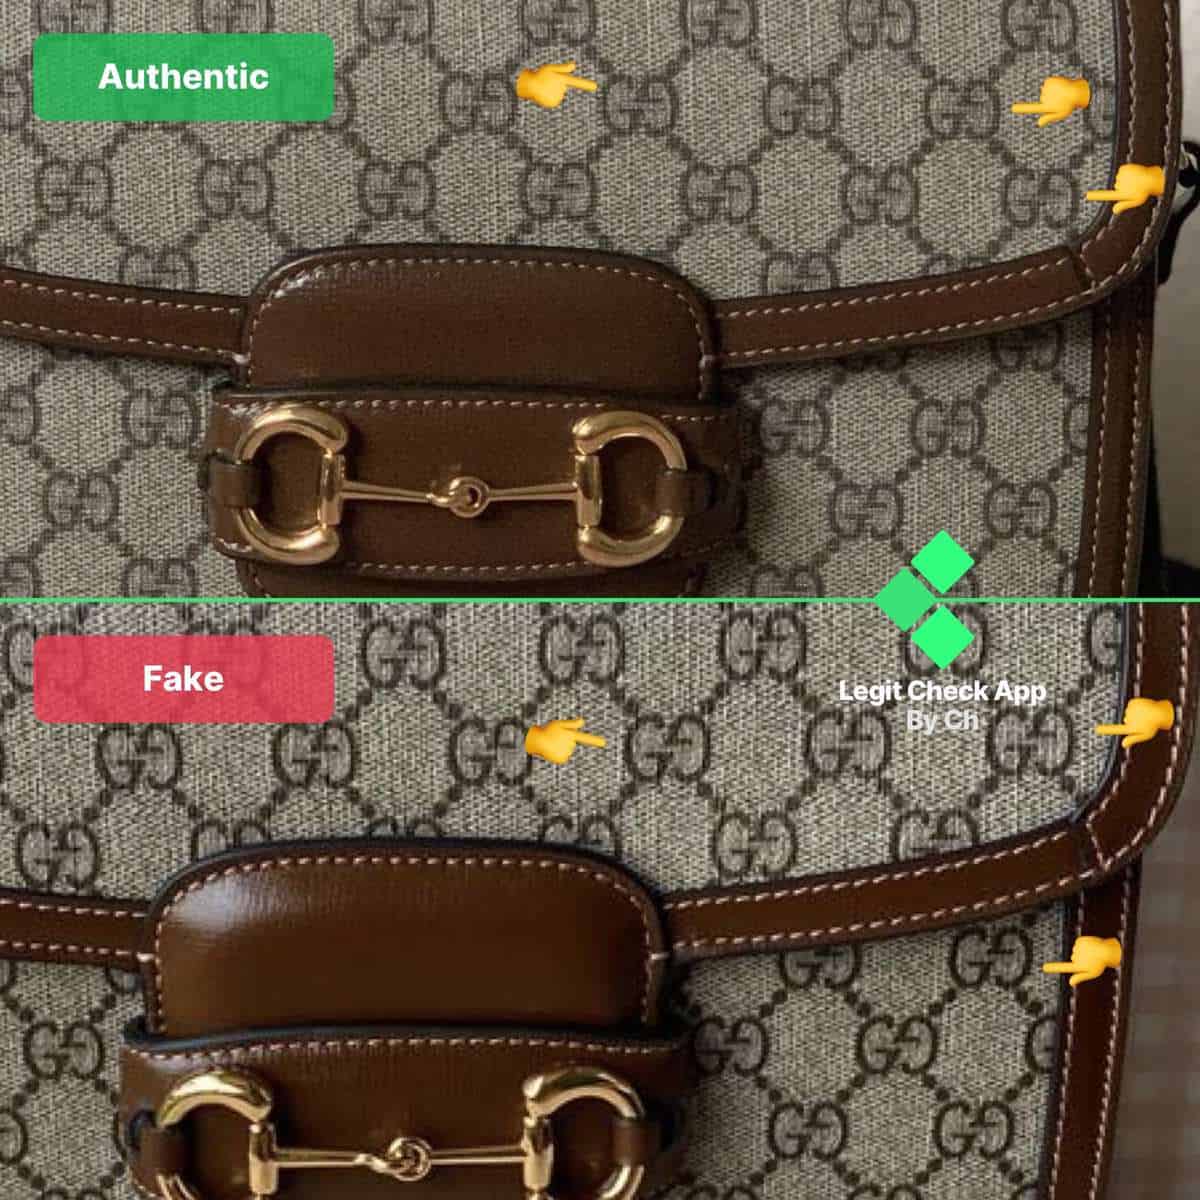 How To Tell A Real Gucci Handbag | semashow.com